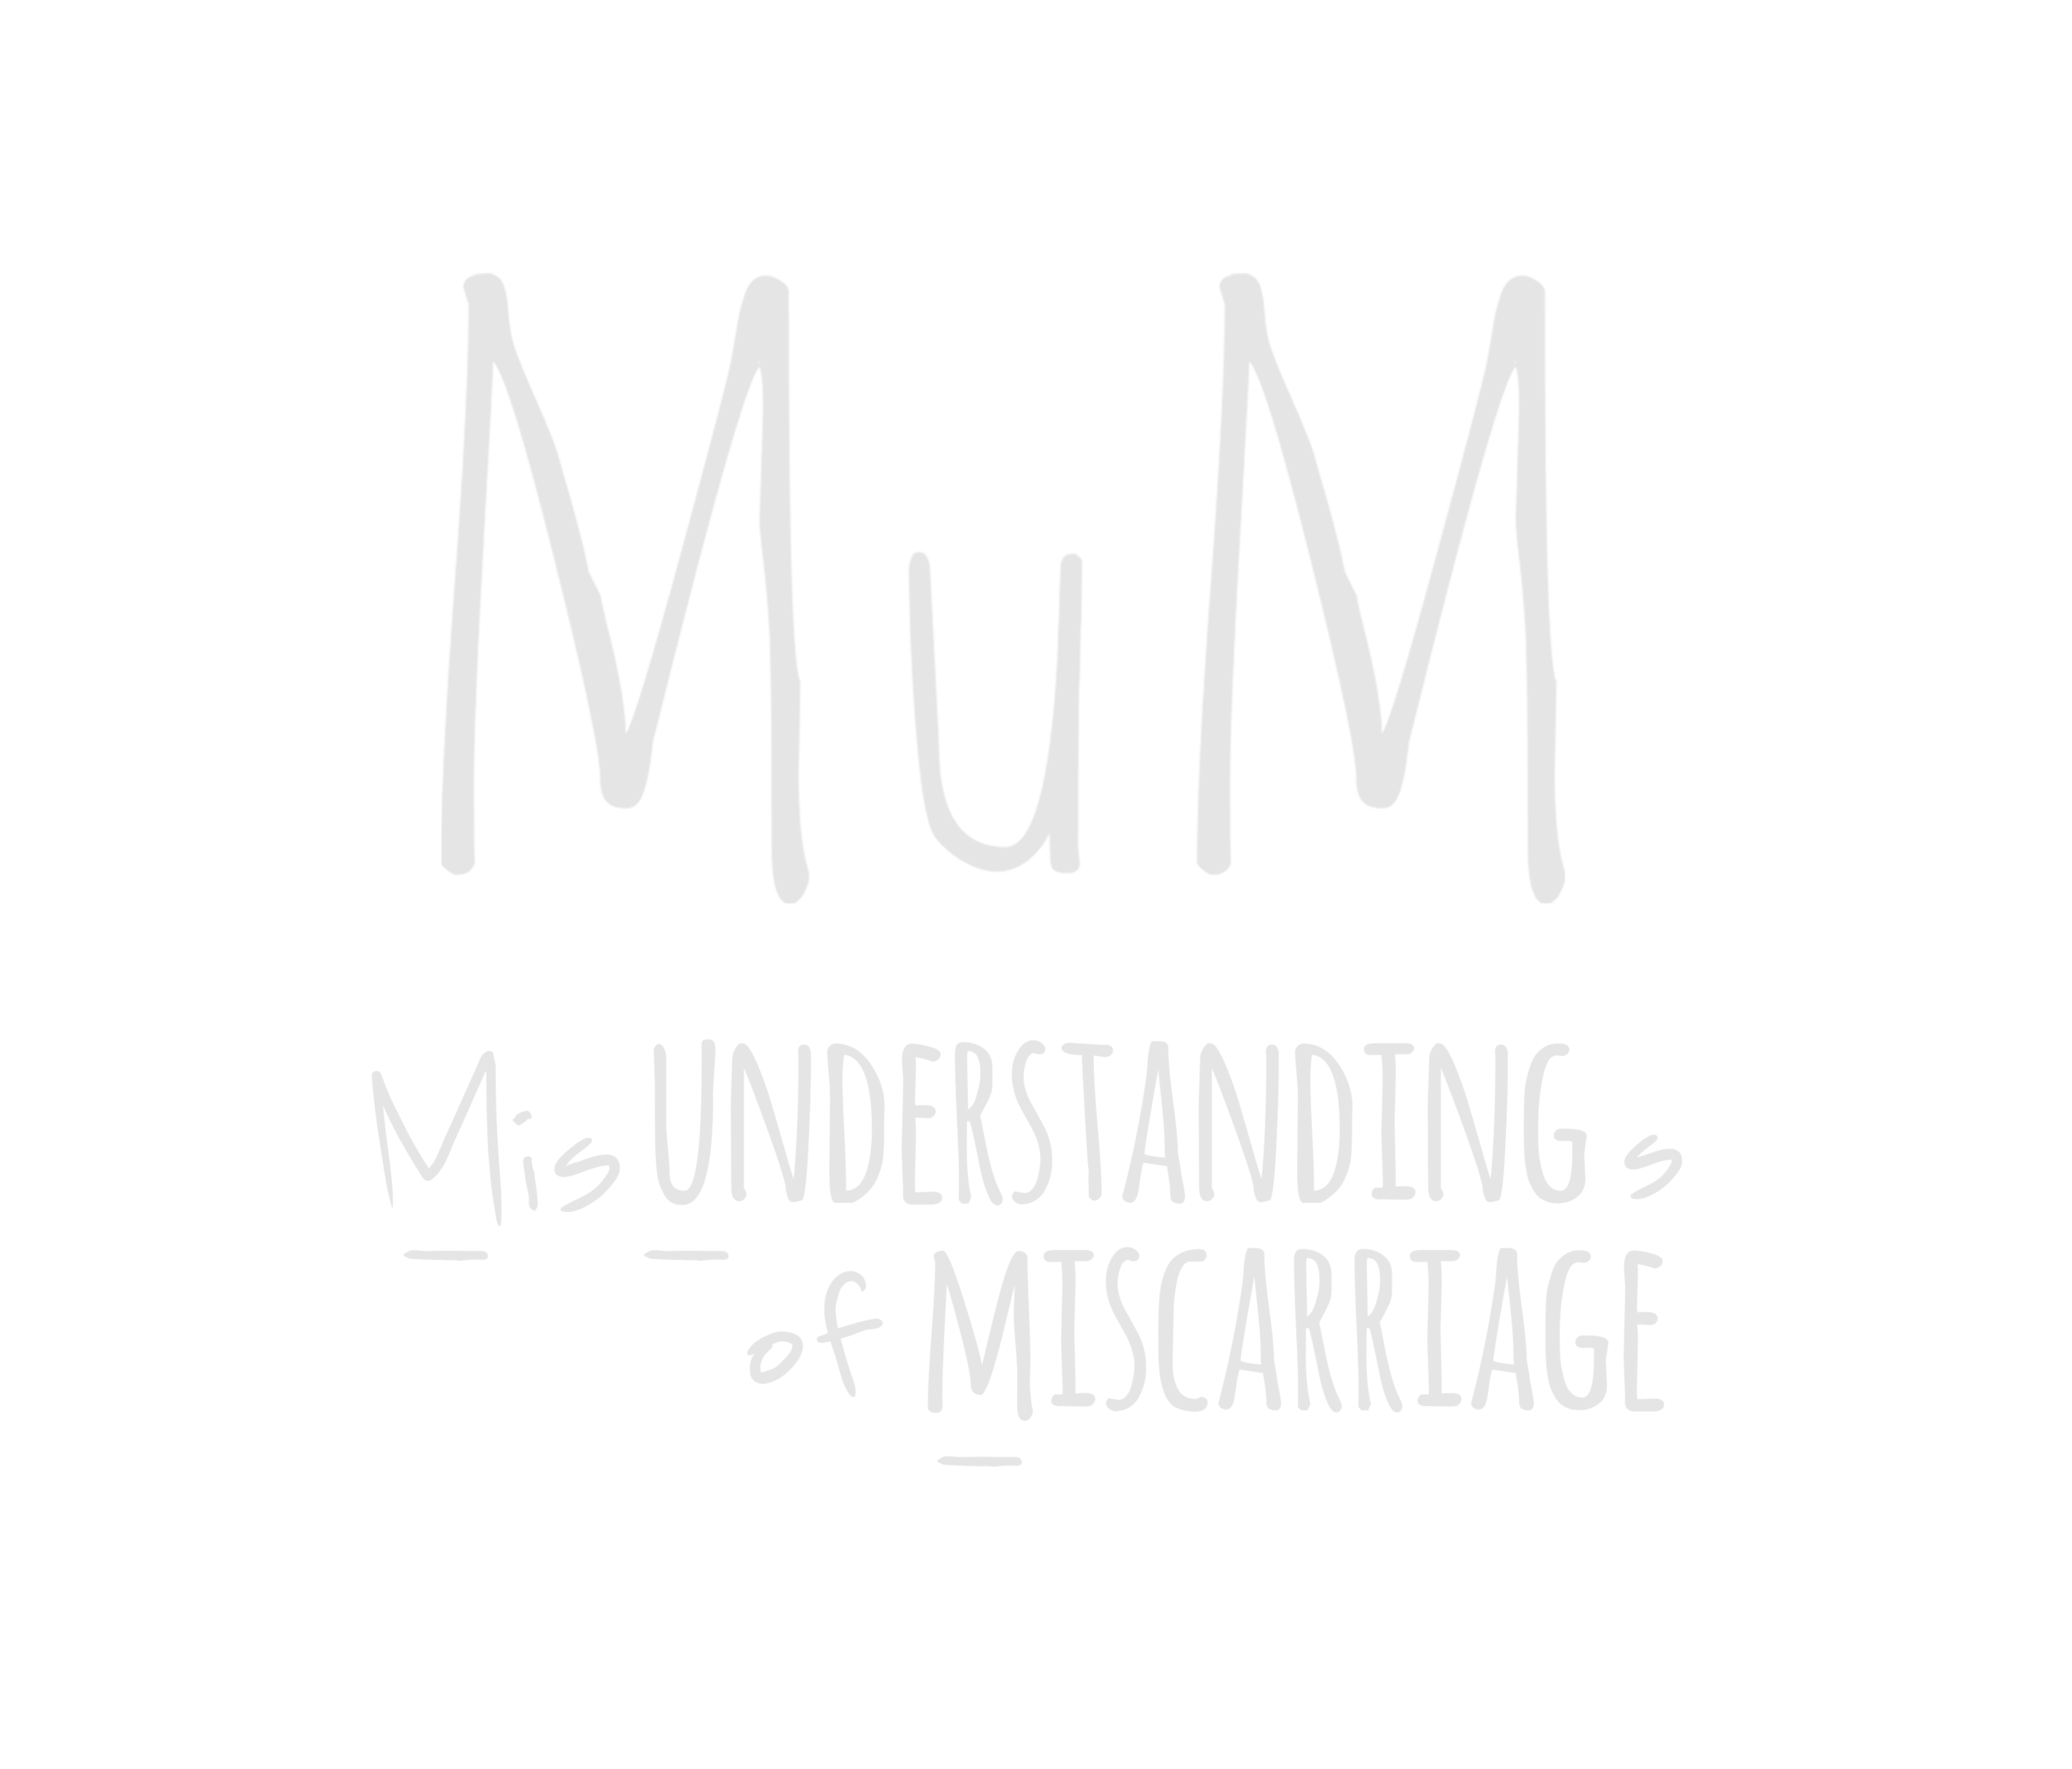 Misunderstandings of Miscarriage (MuM)